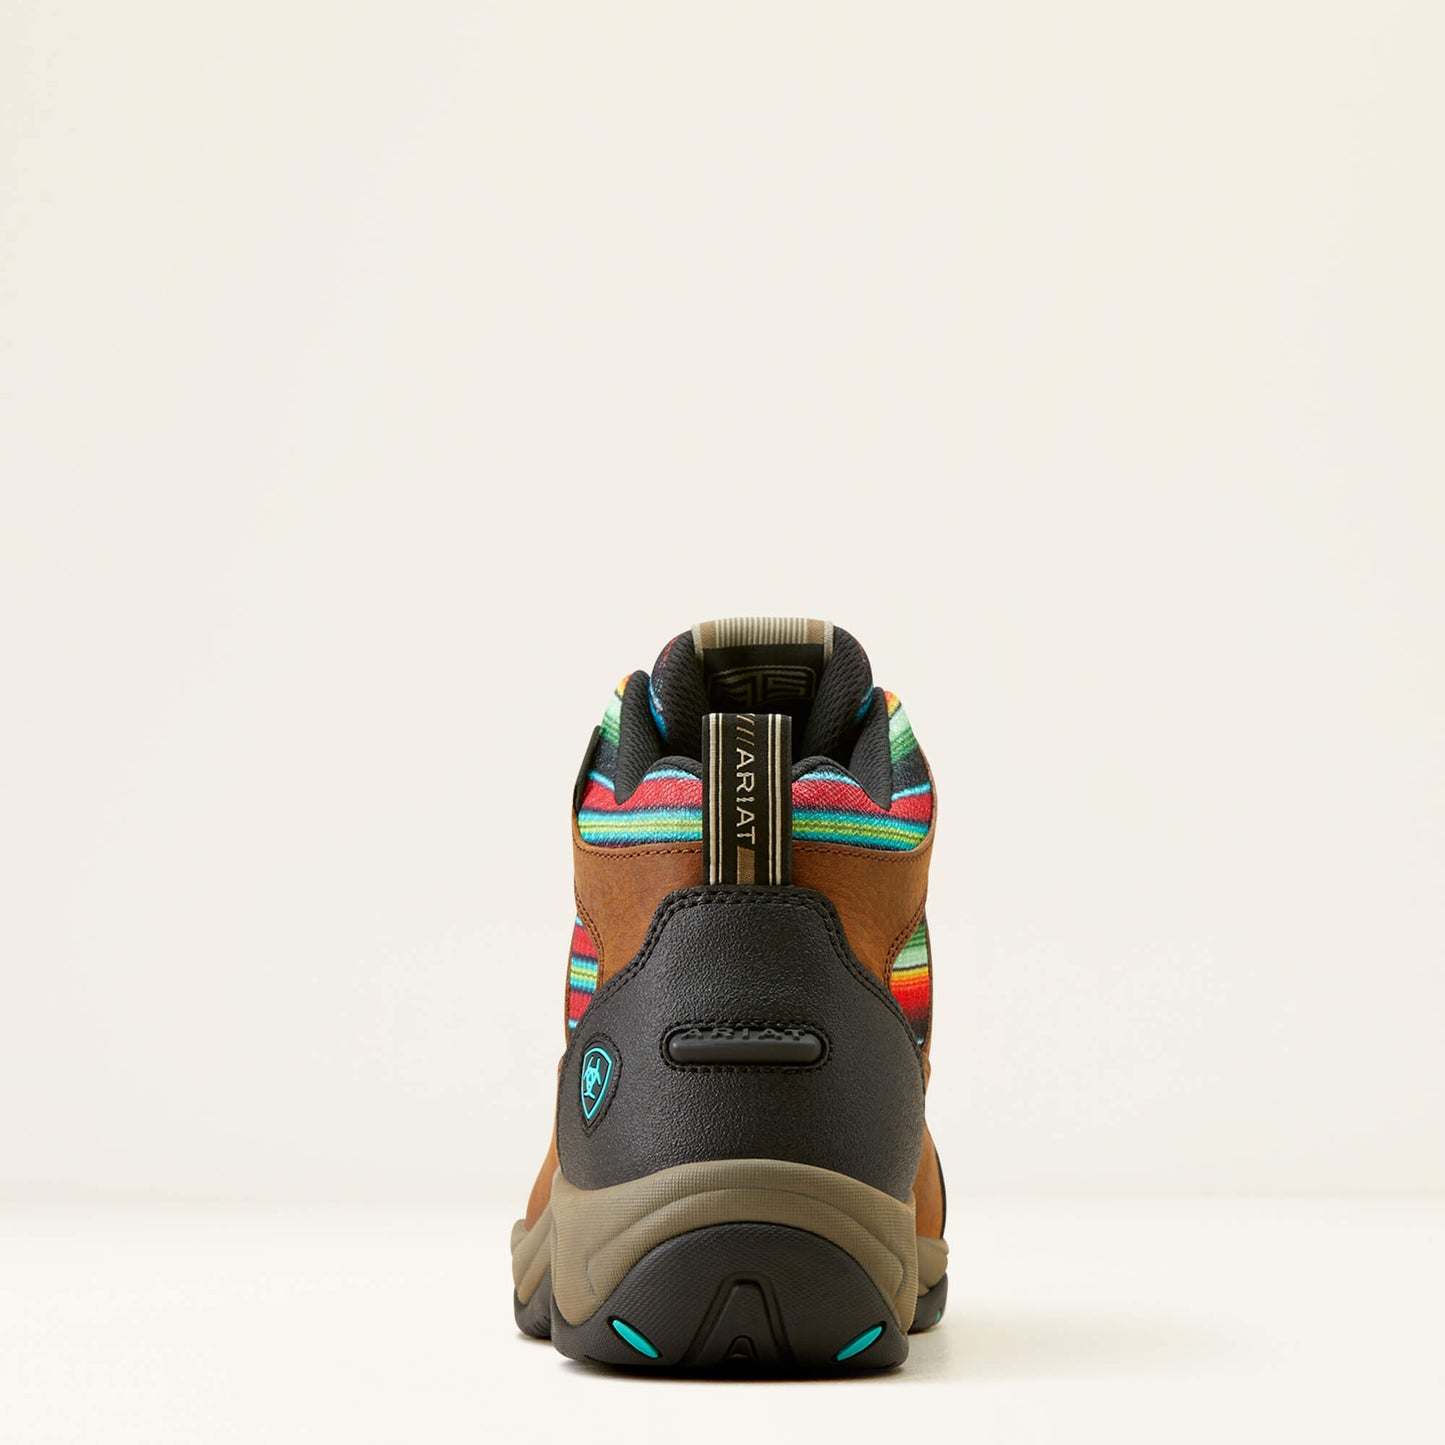 Ariat Terrain 360 Women's Boots